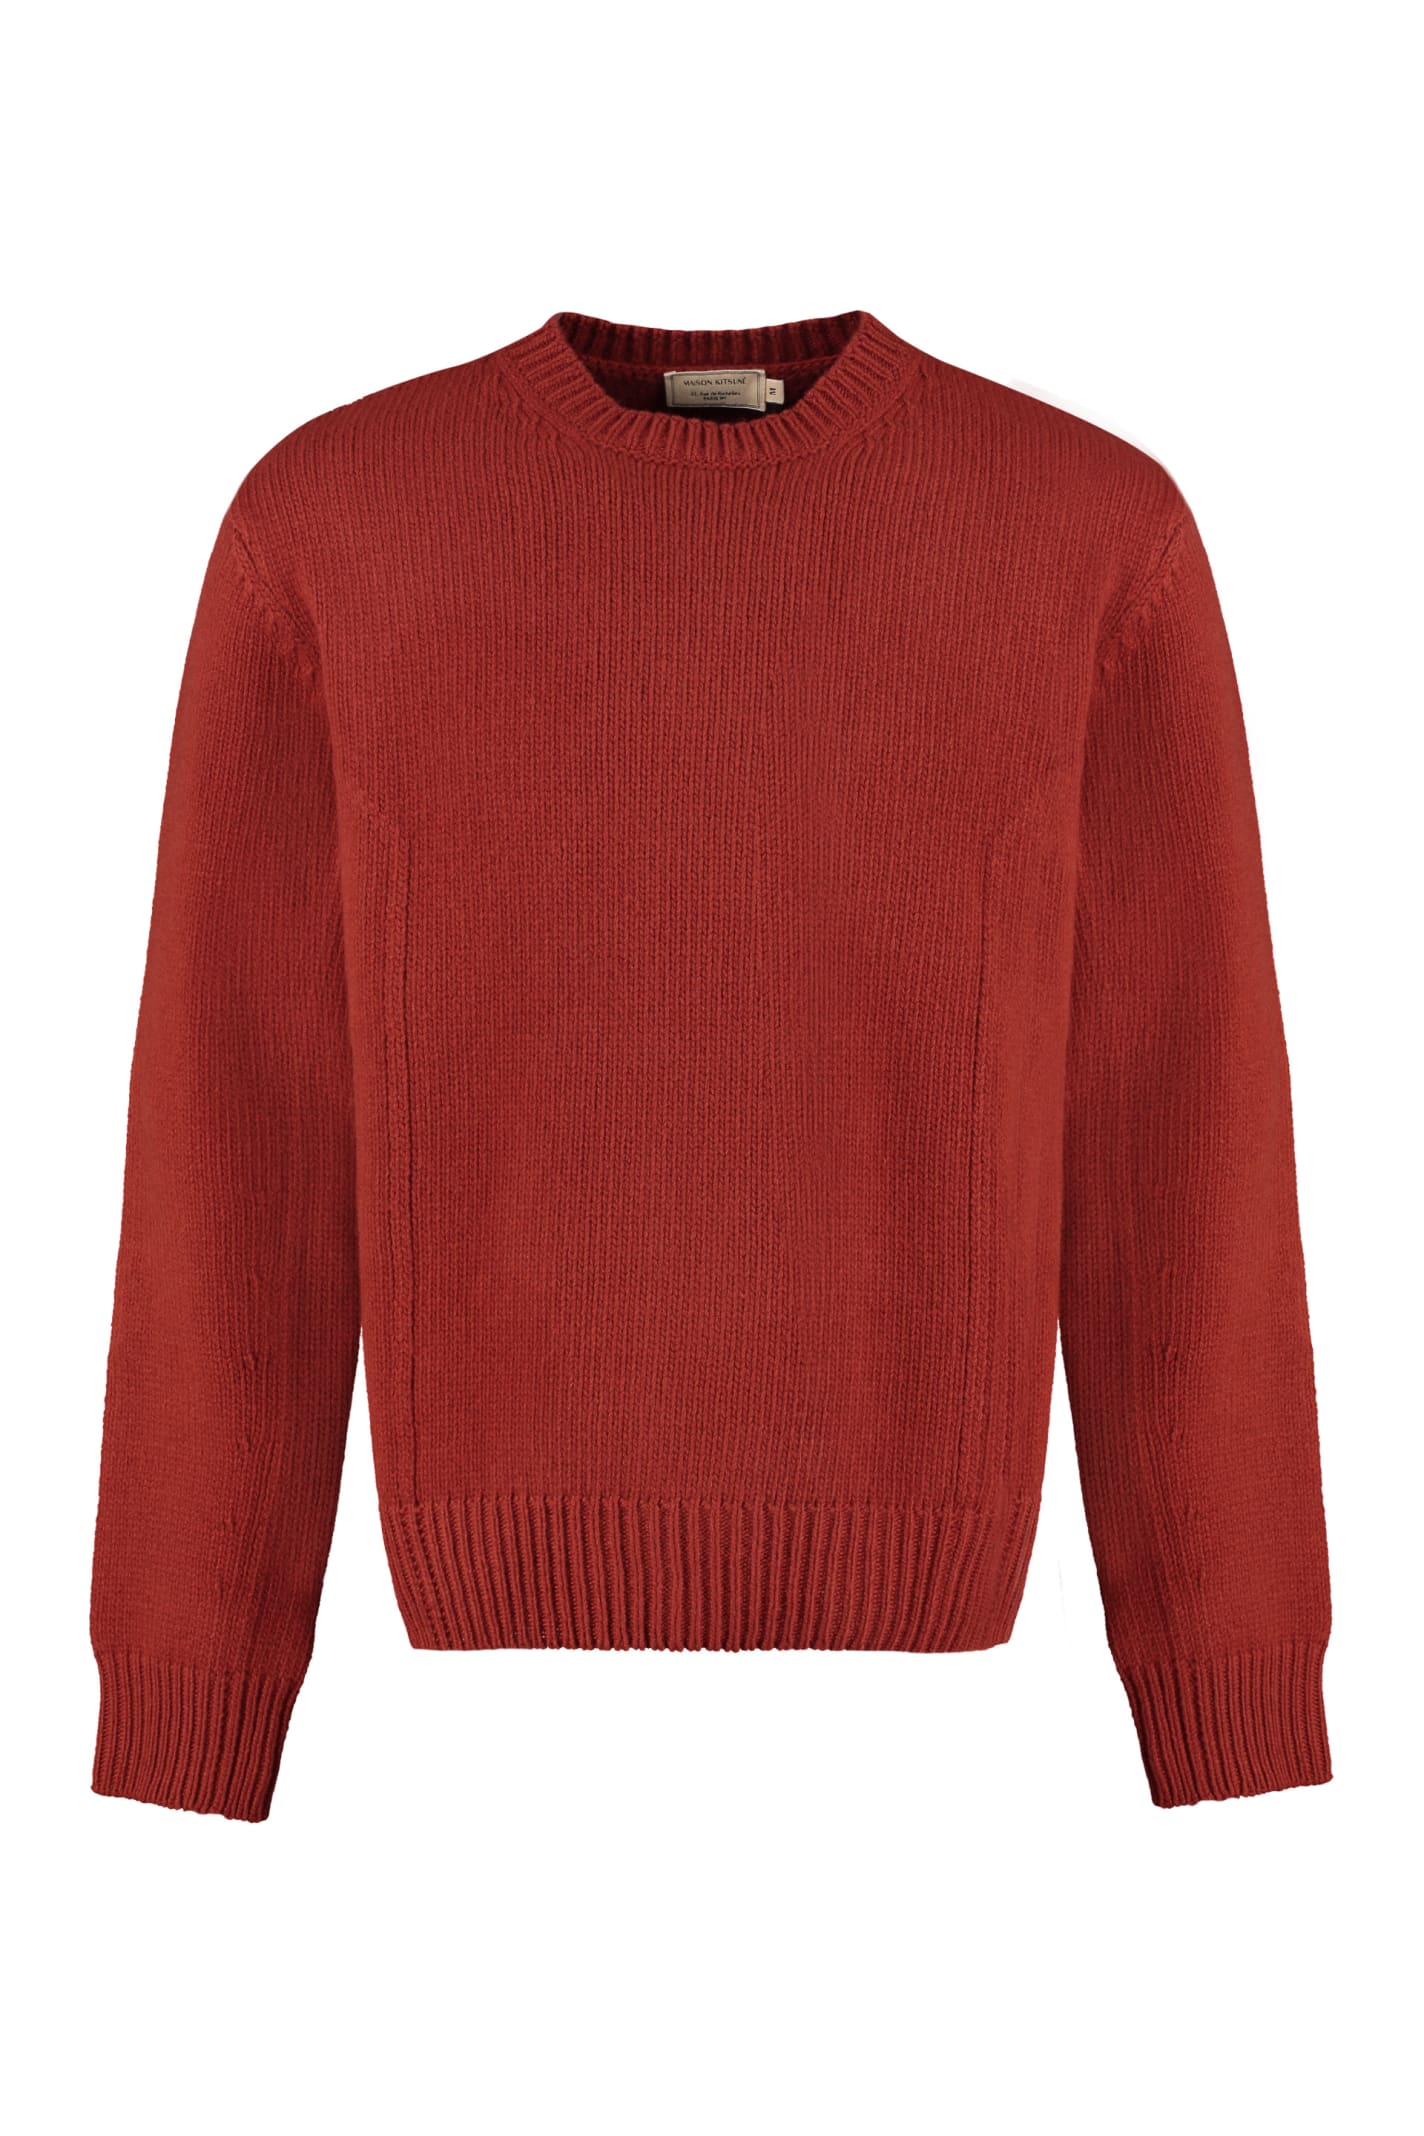 Maison Kitsuné Crew-neck Wool Sweater